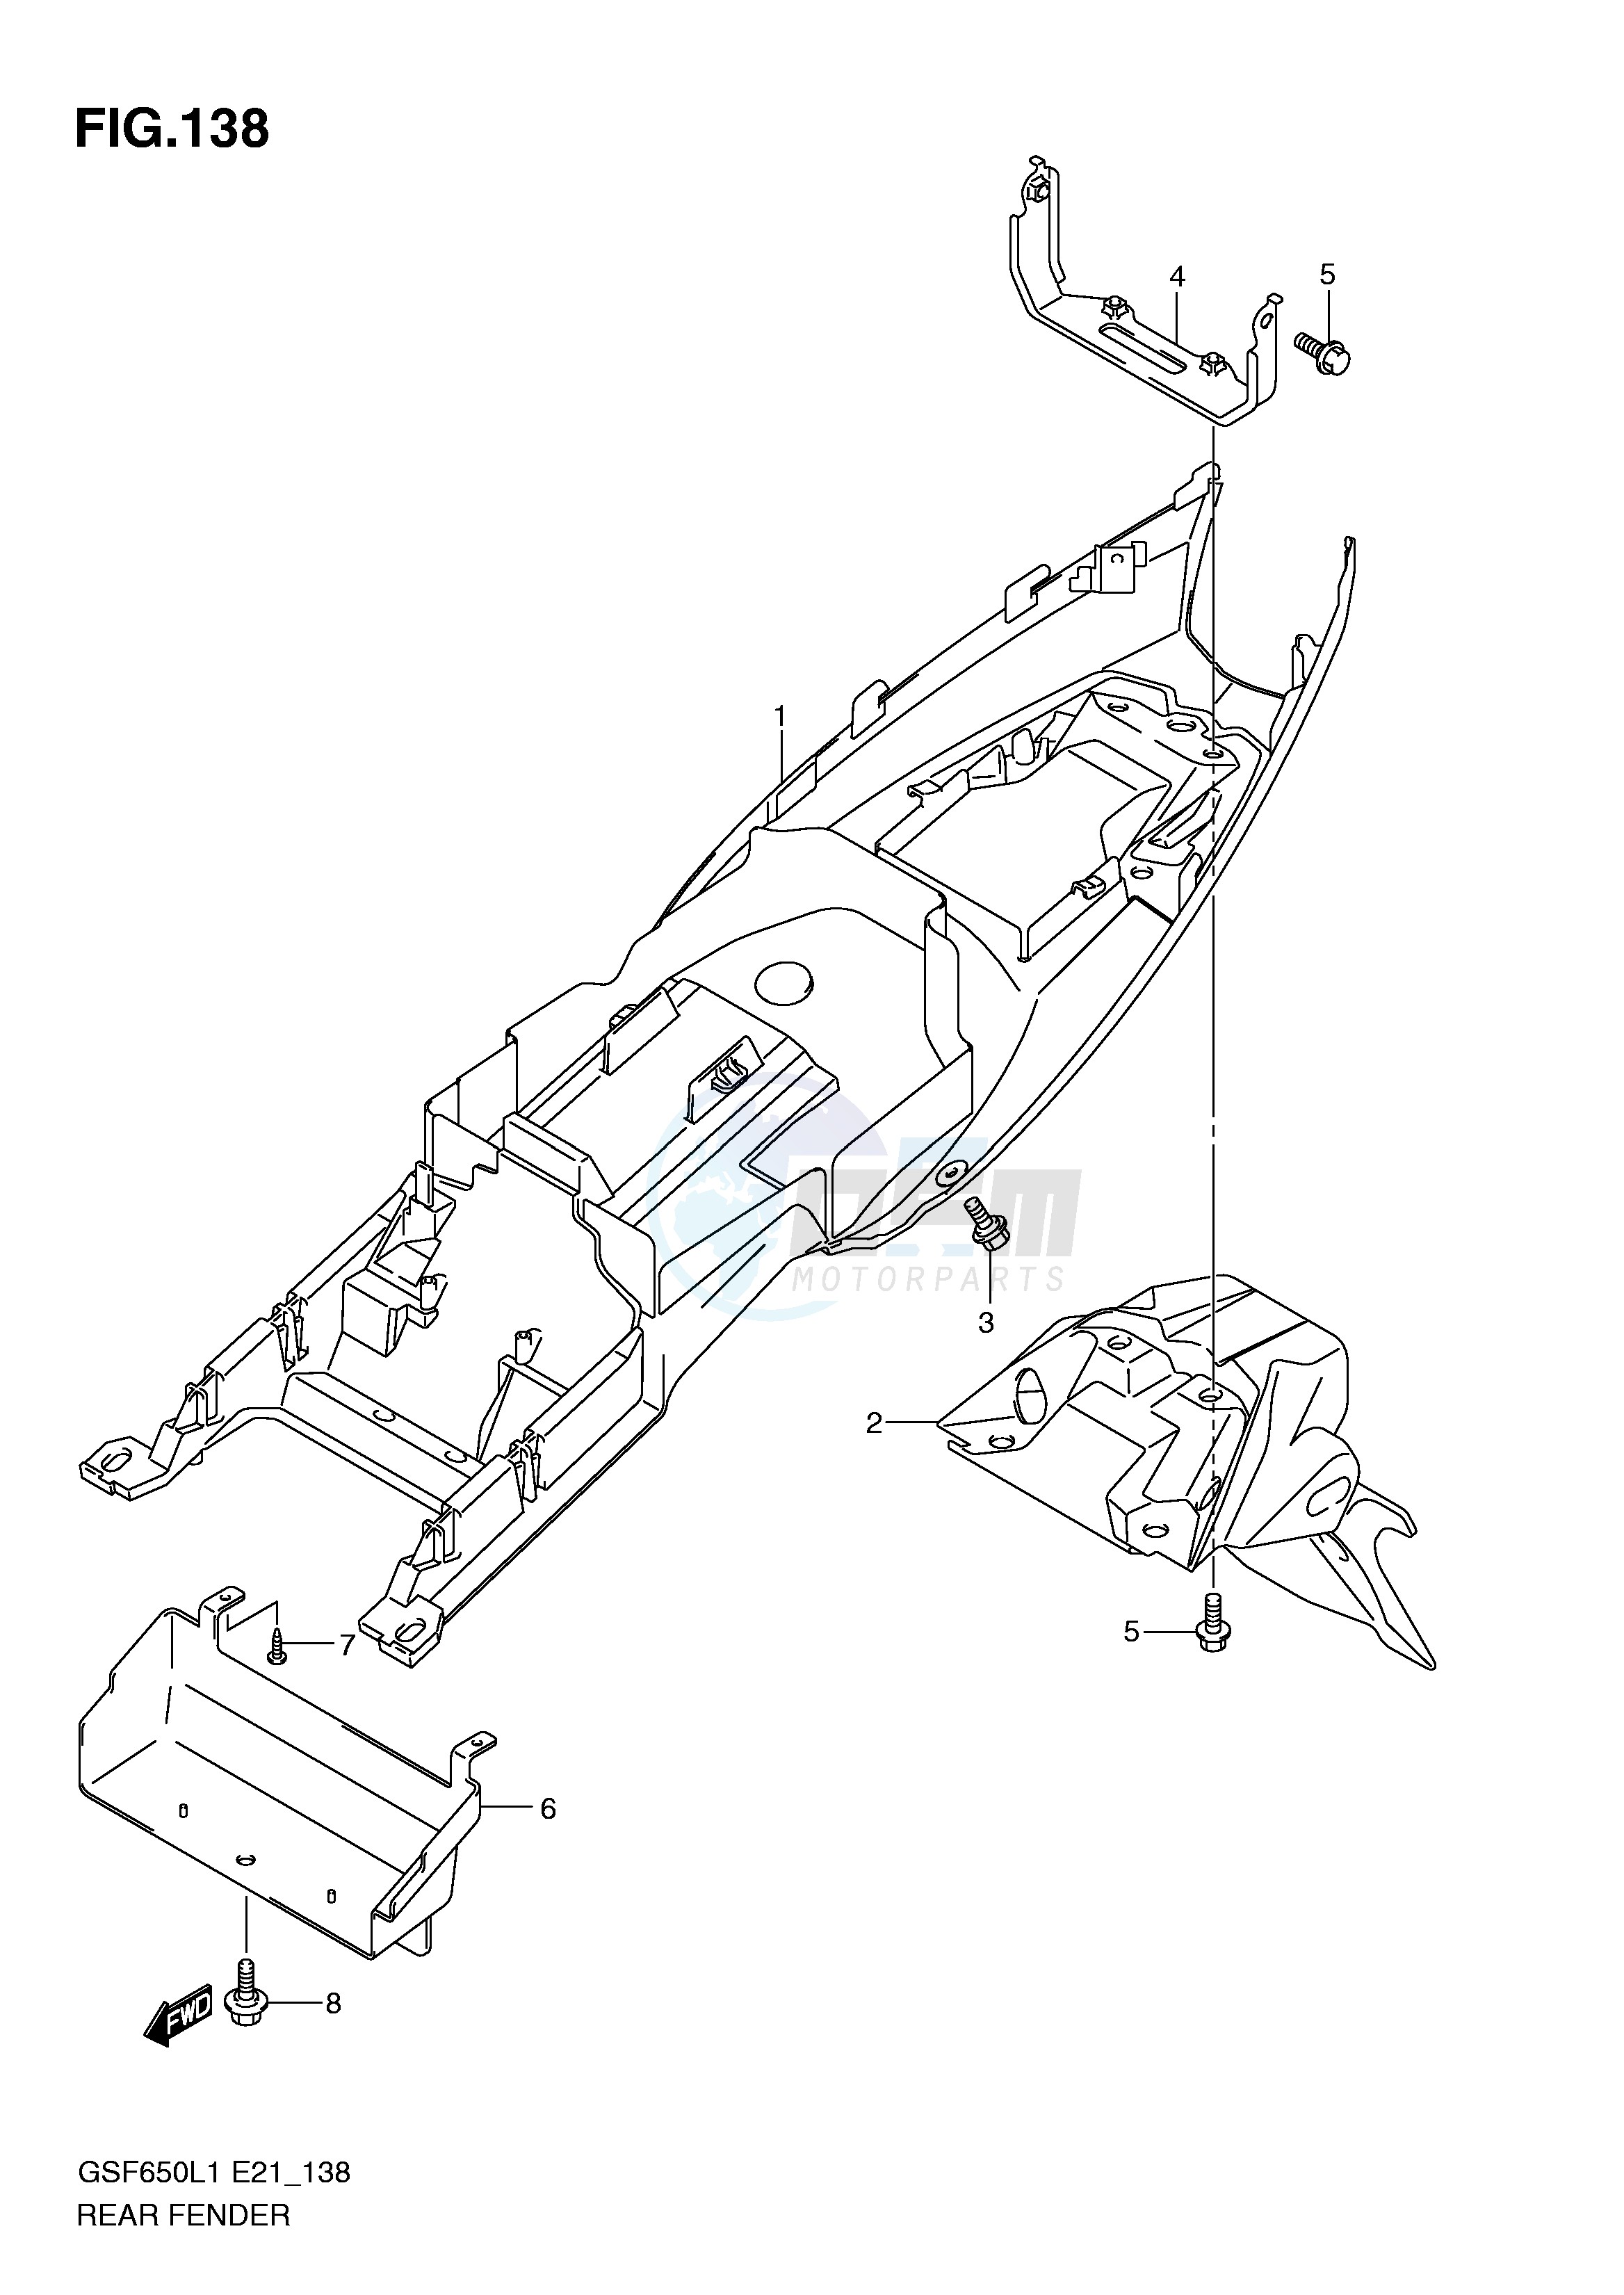 REAR FENDER (GSF650UAL1 E21) blueprint